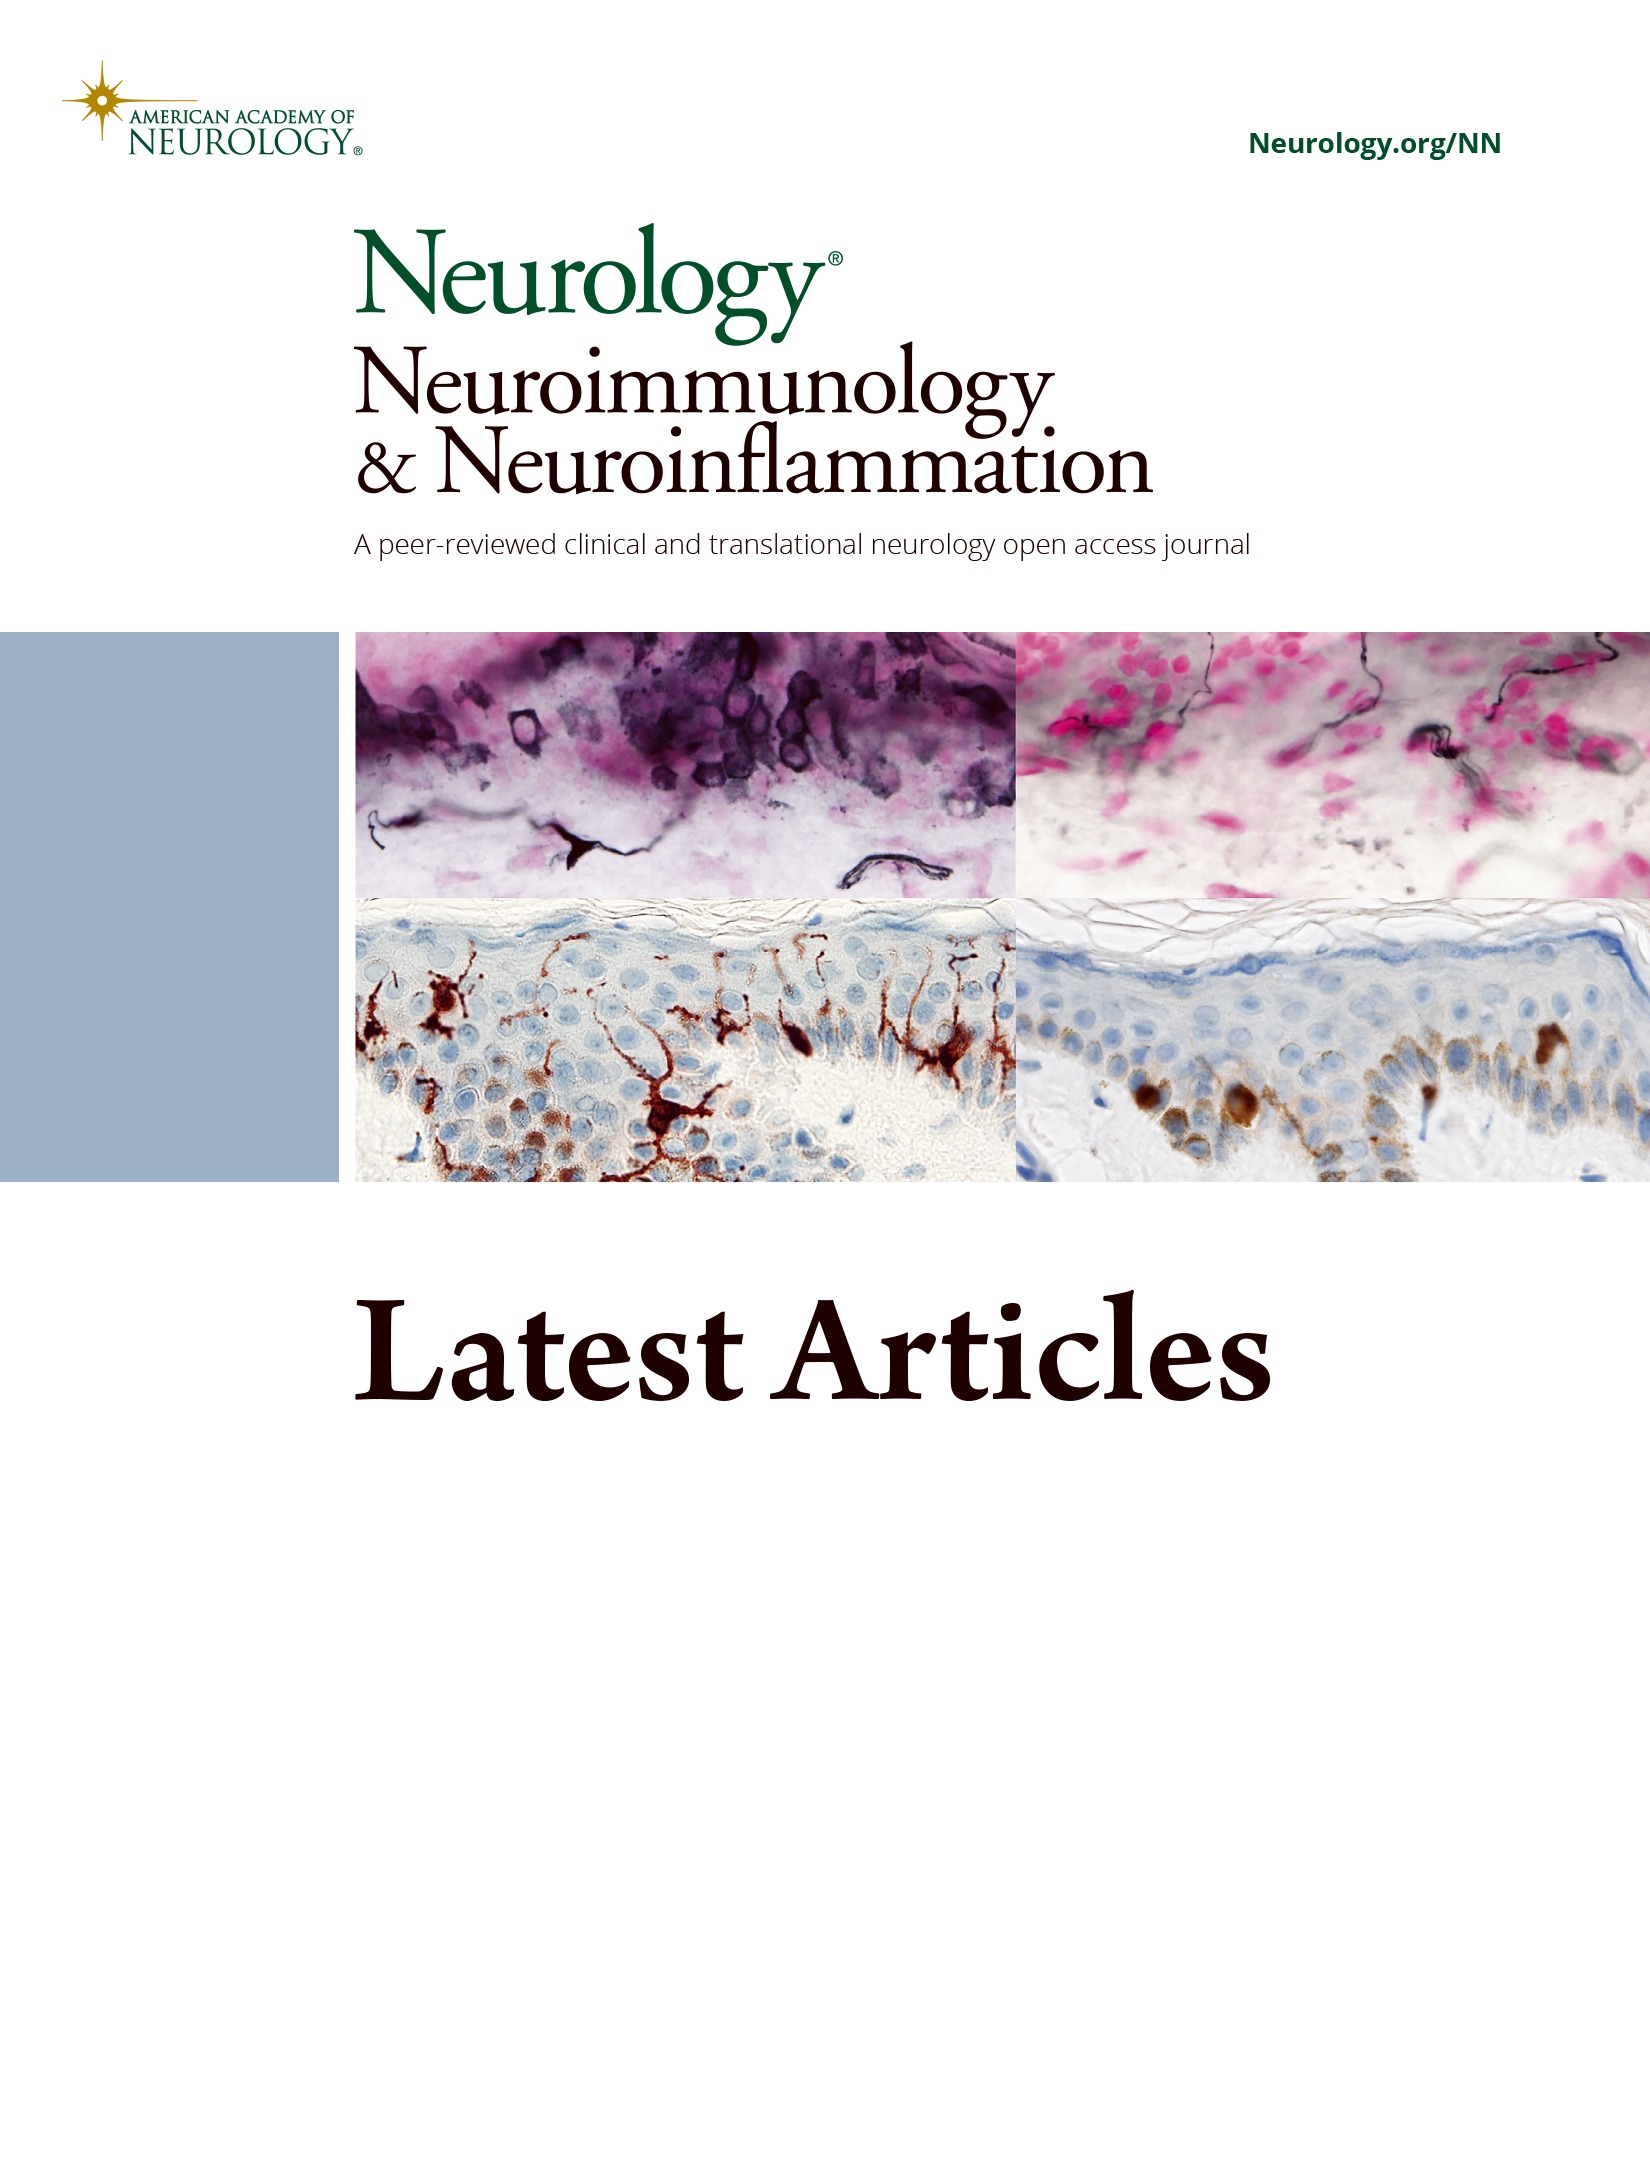 Chronic Enterovirus Meningoencephalitis in Prolonged B-Cell Depletion After Rituximab Therapy: Case Report